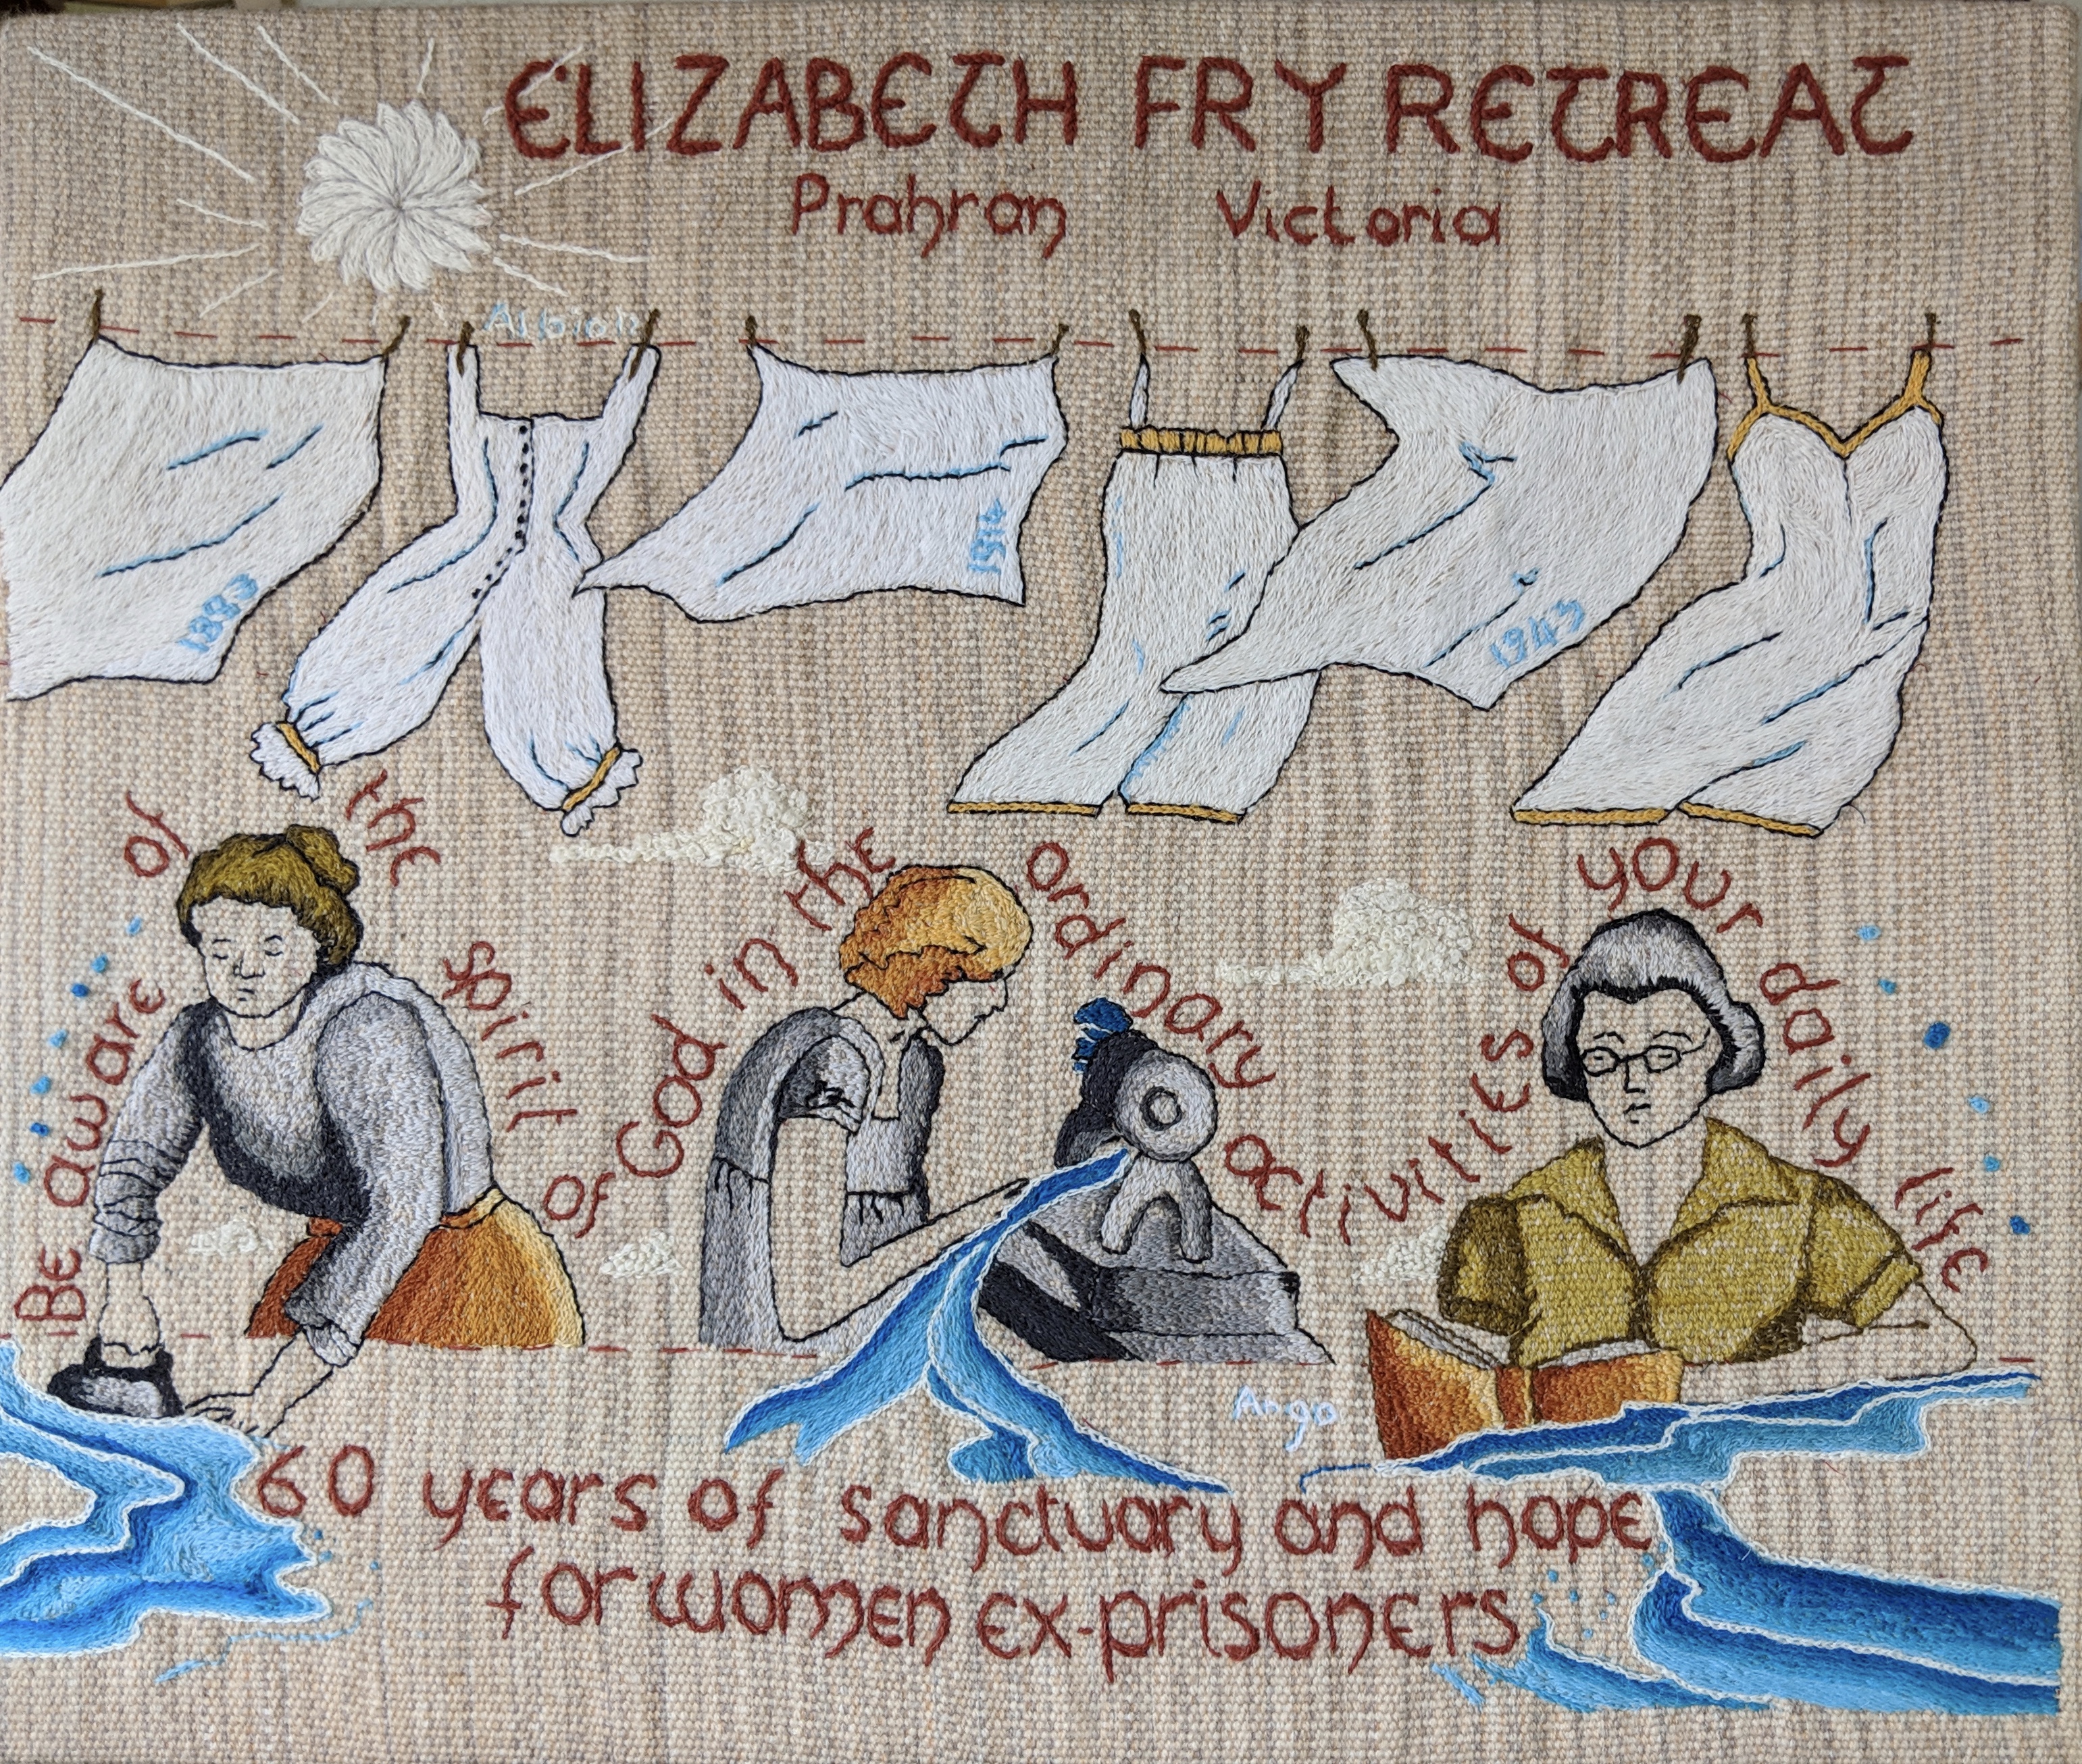 Elizabeth Fry Retreat